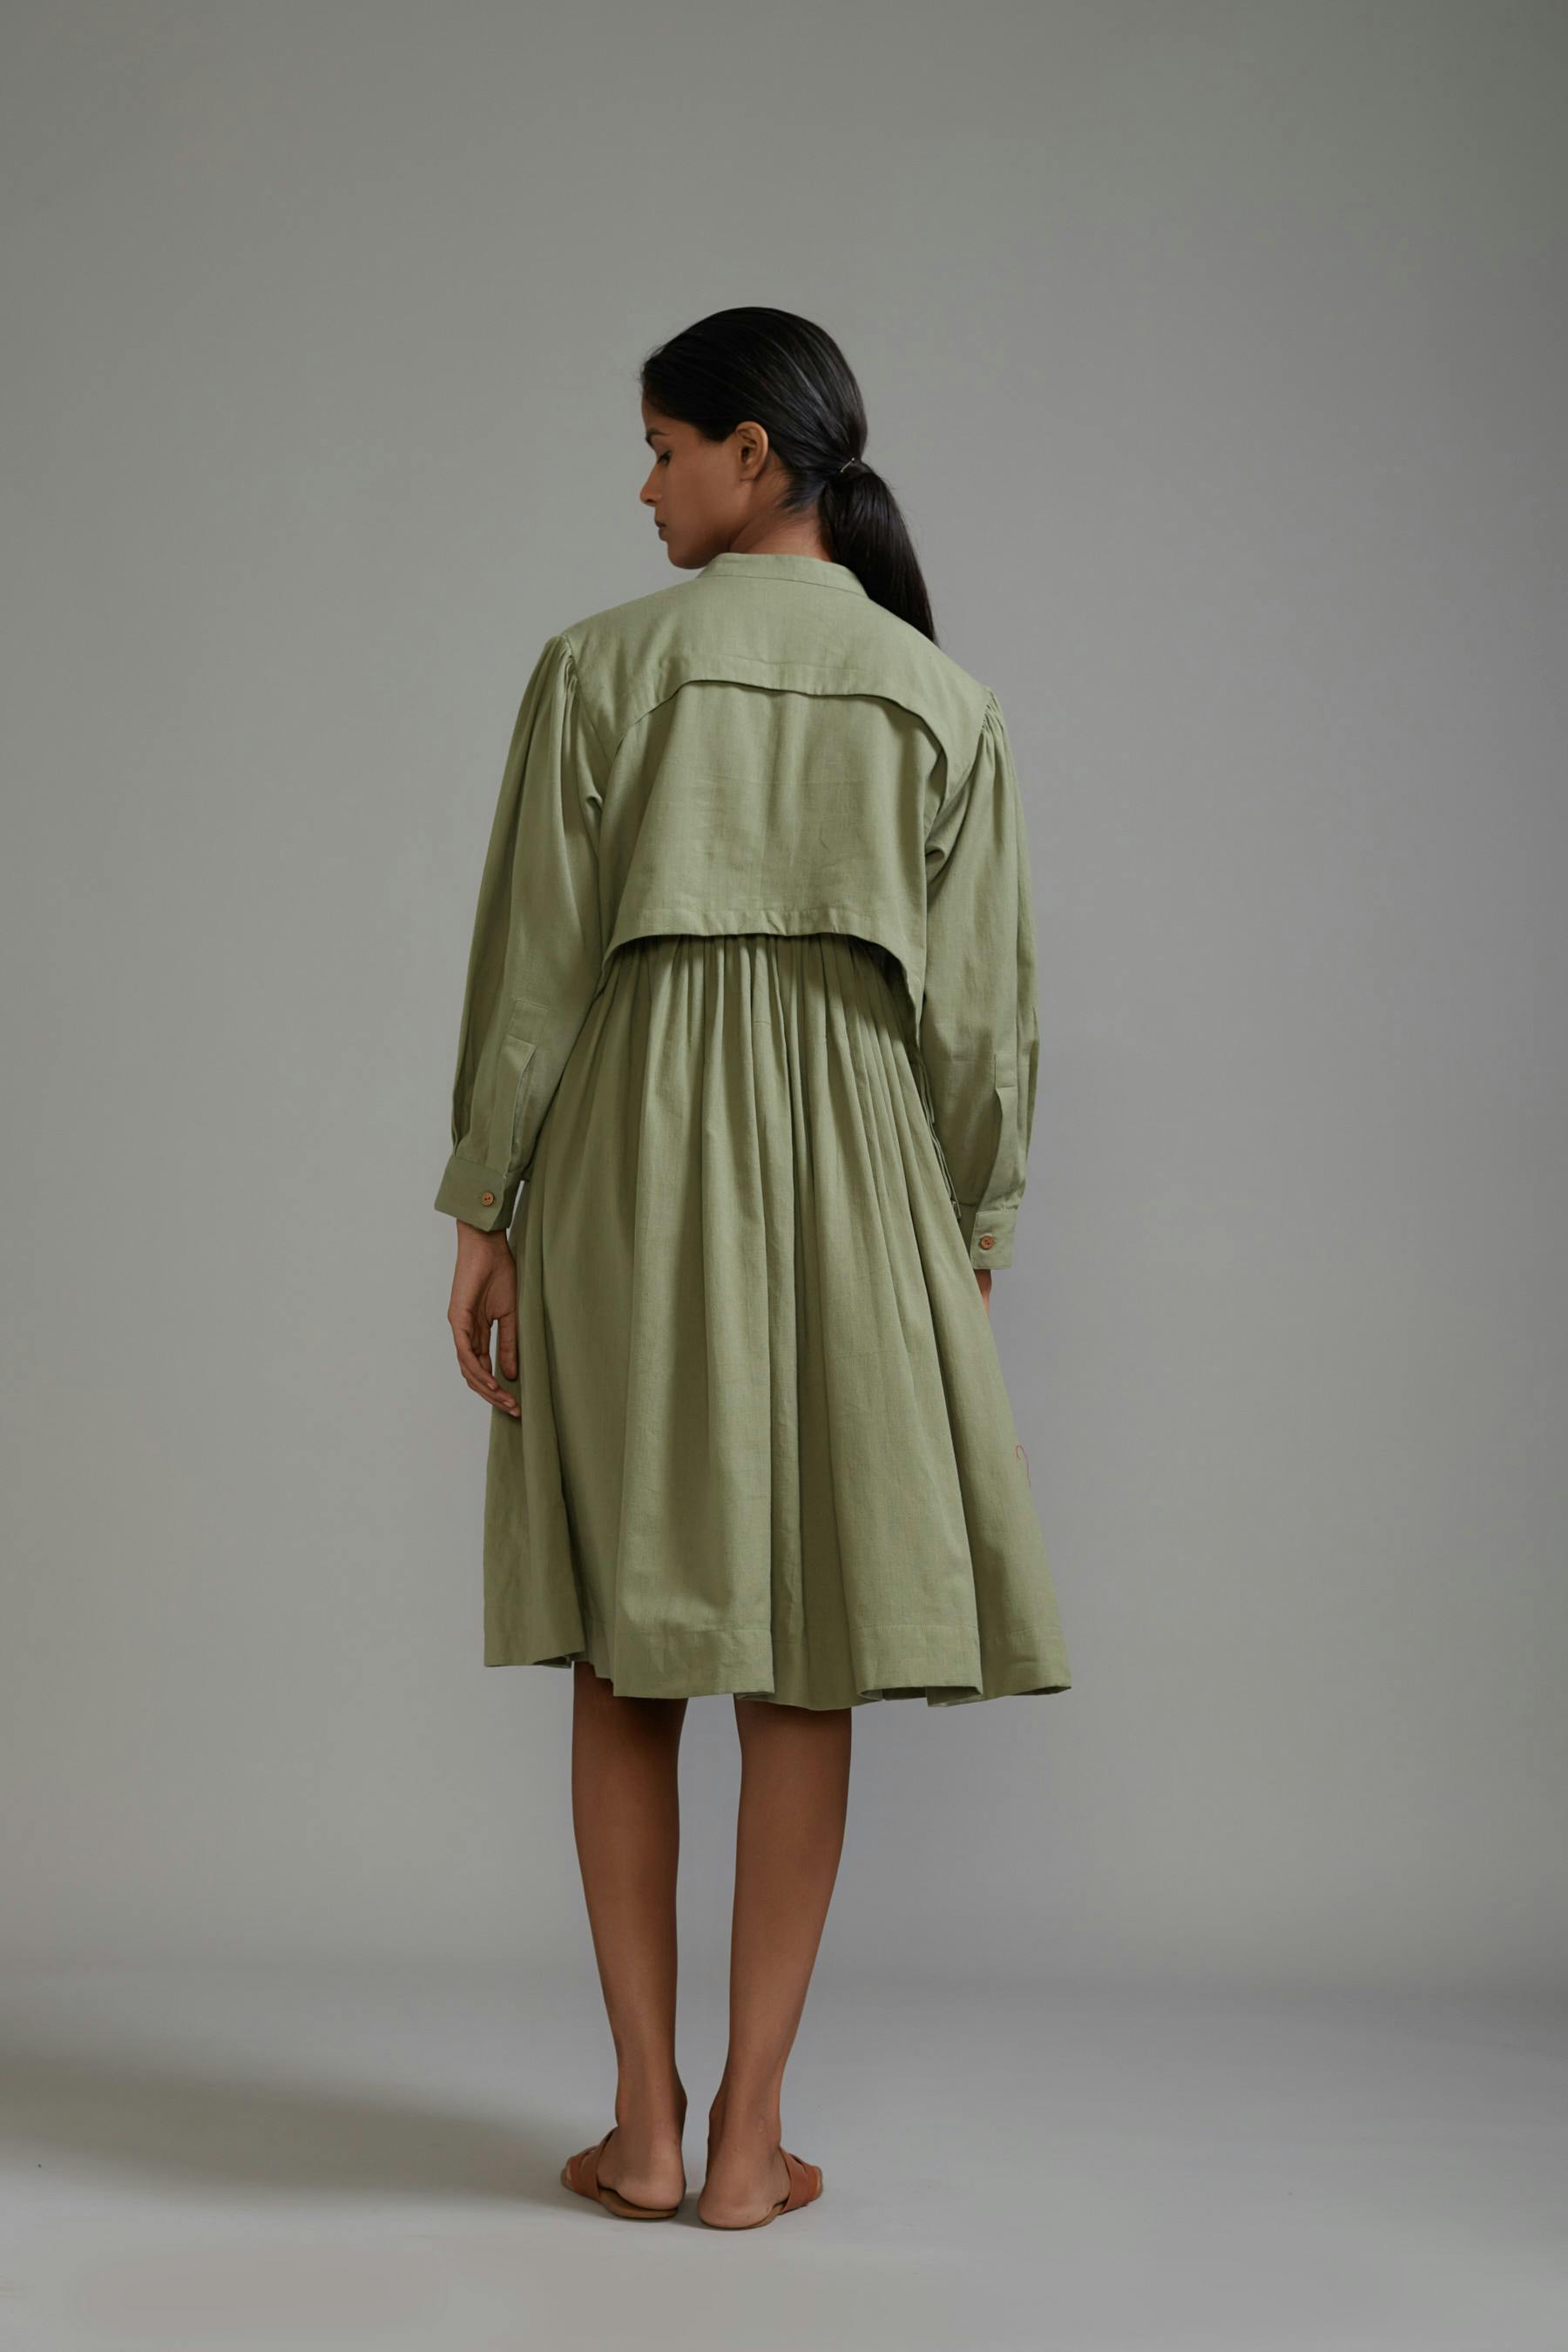 Thumbnail preview #2 for Green Safari Short Dress